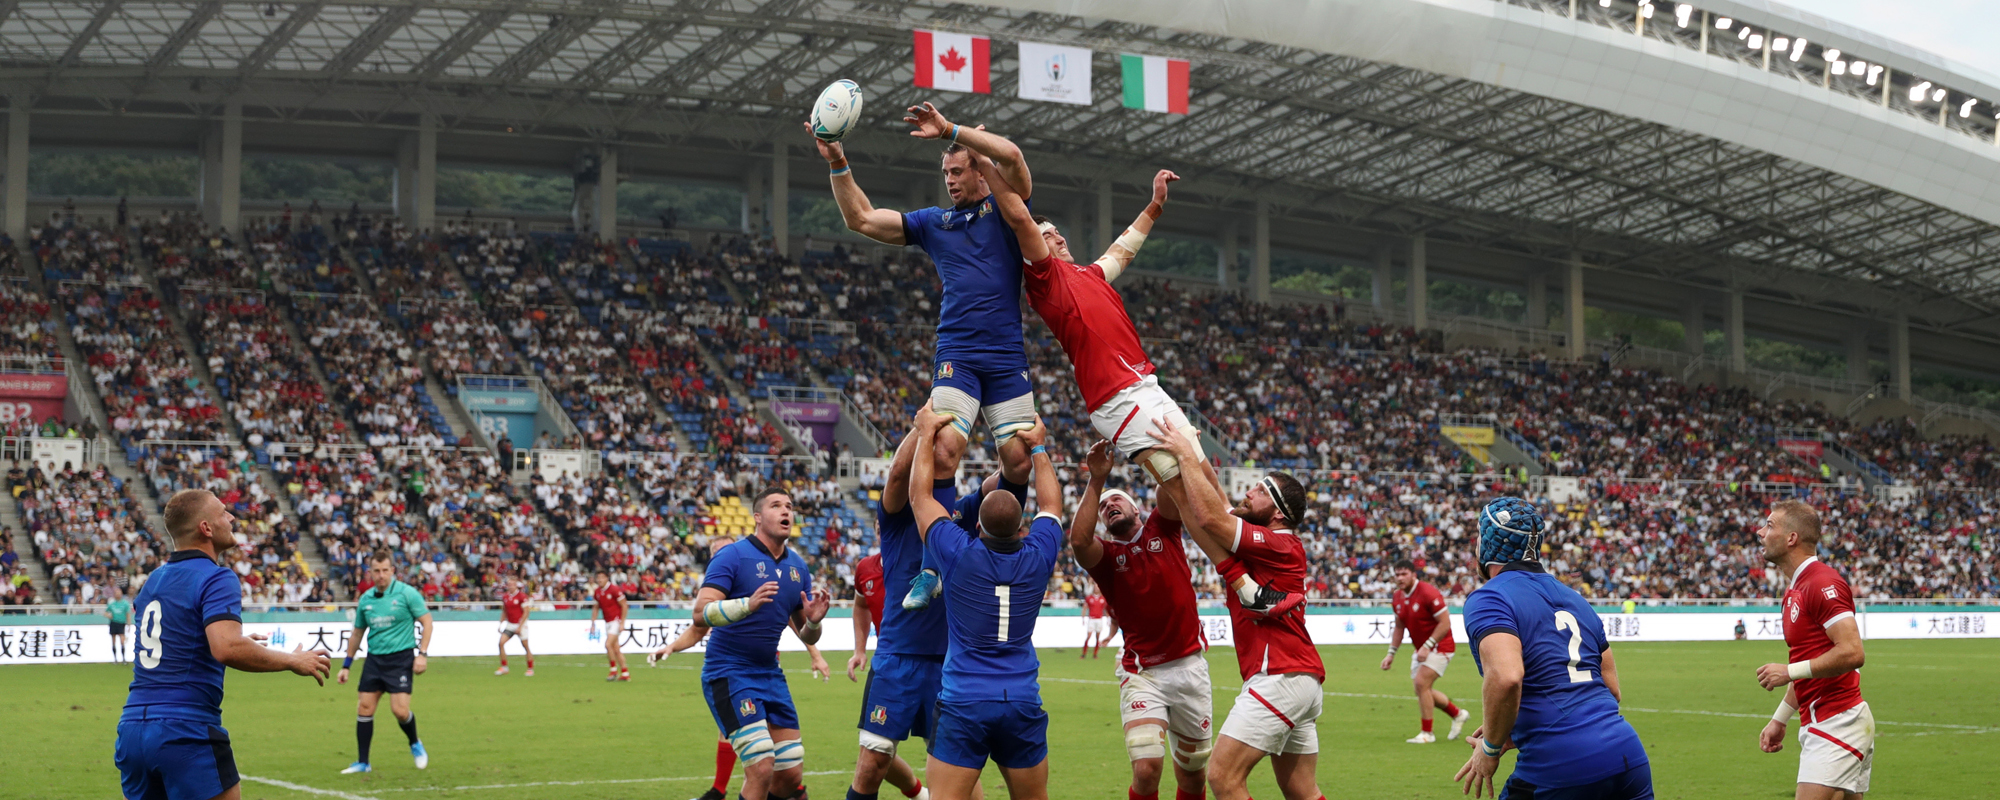 Match rugby Canada - Italie